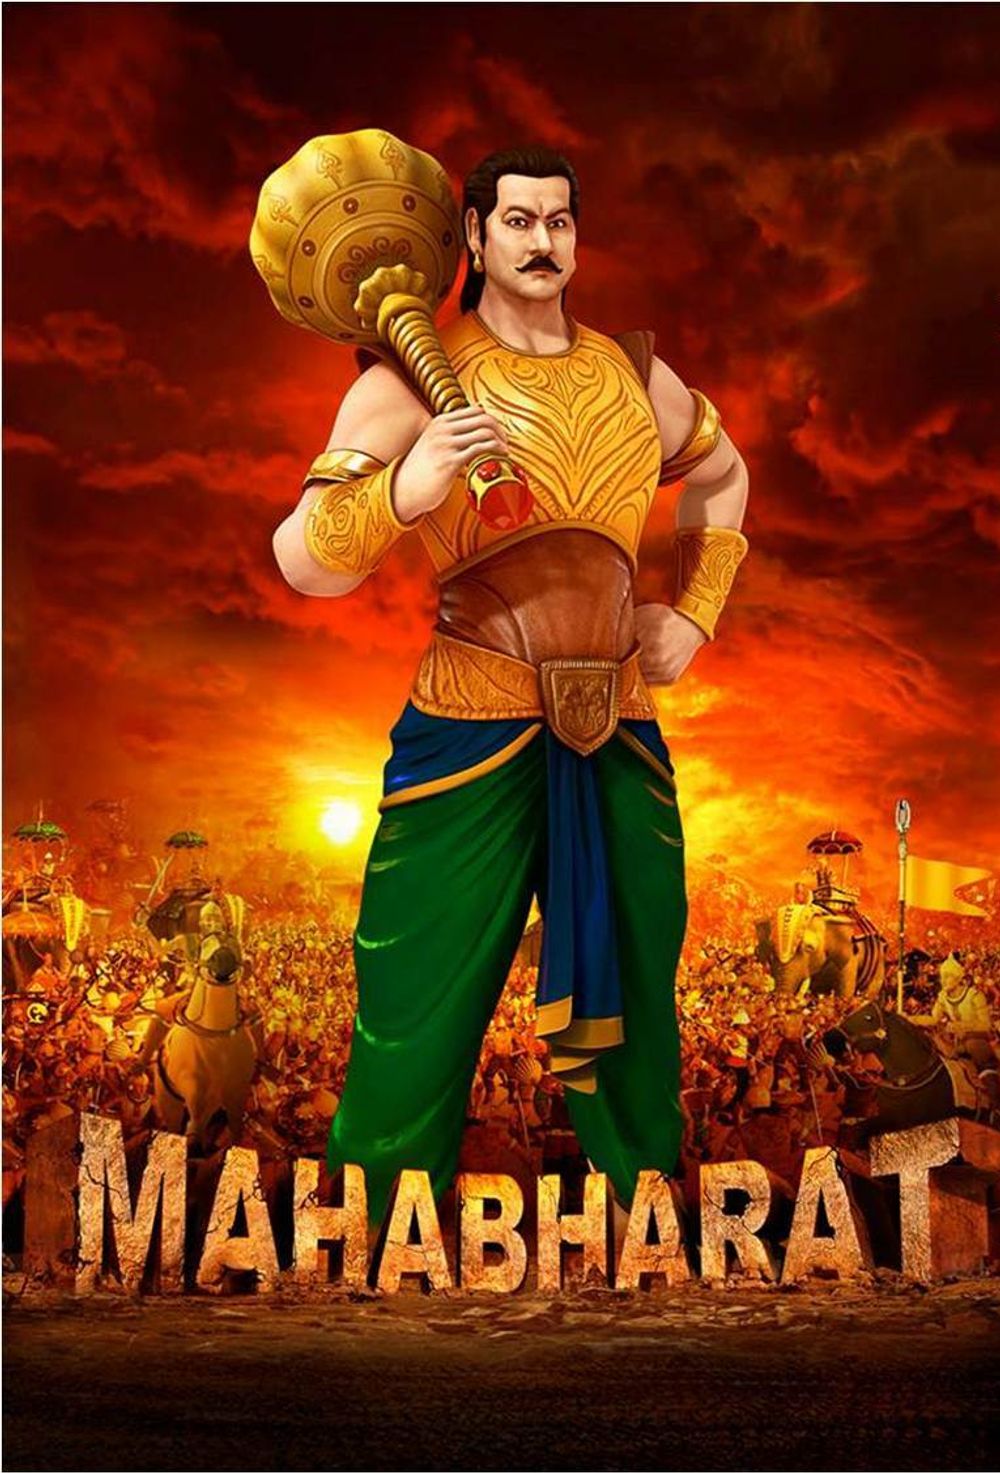 Mahabharat Movie Review